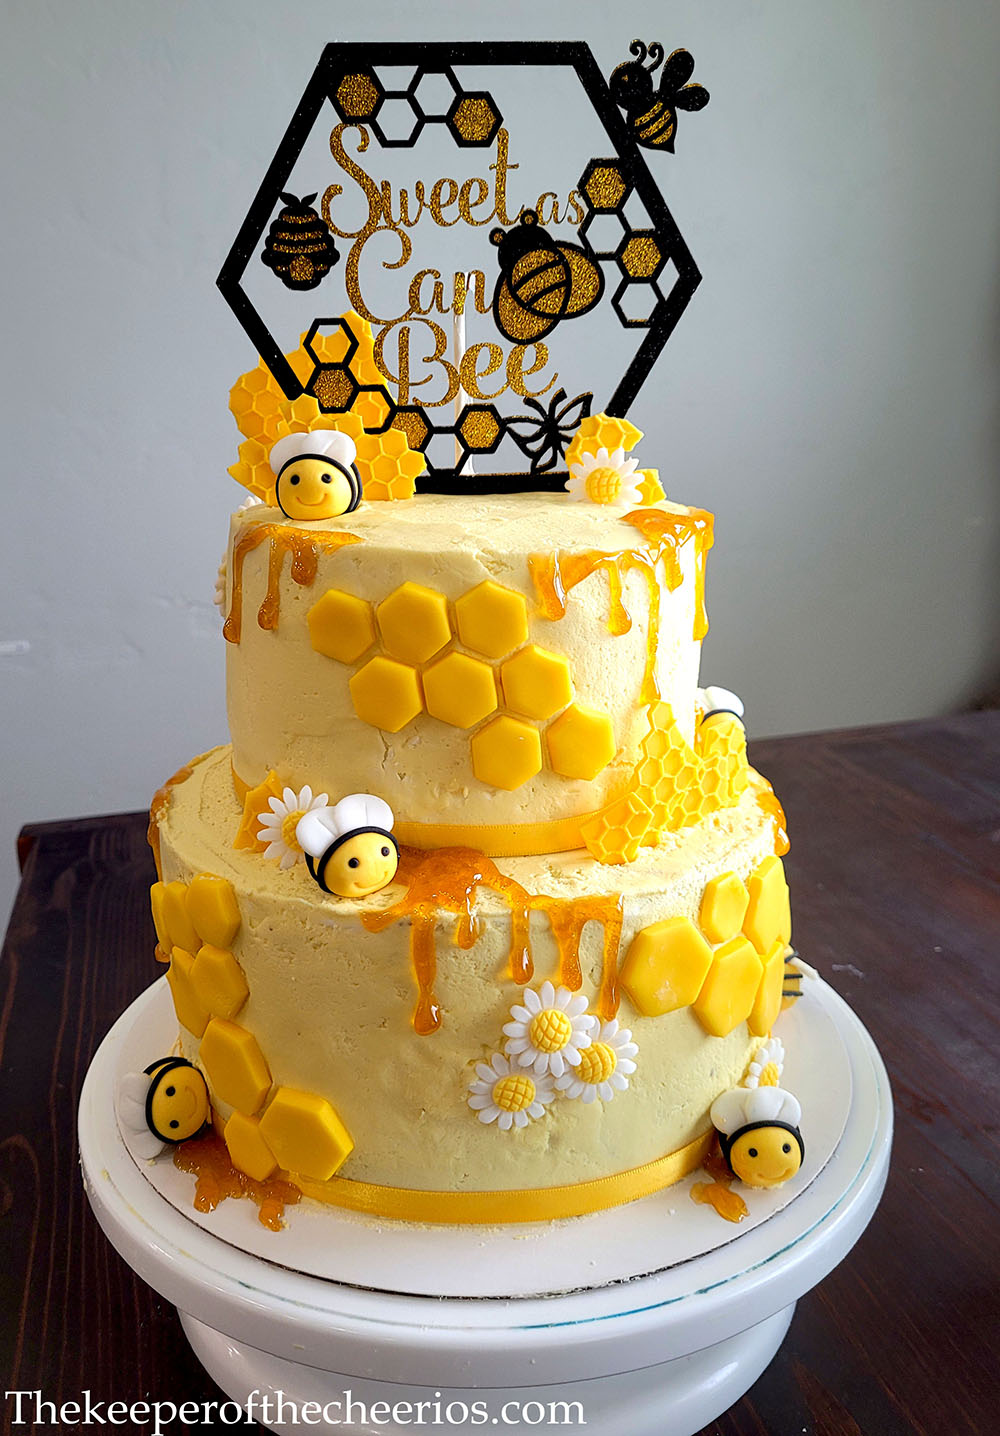 Bumblebee Honeycomb Cake - She Who Bakes